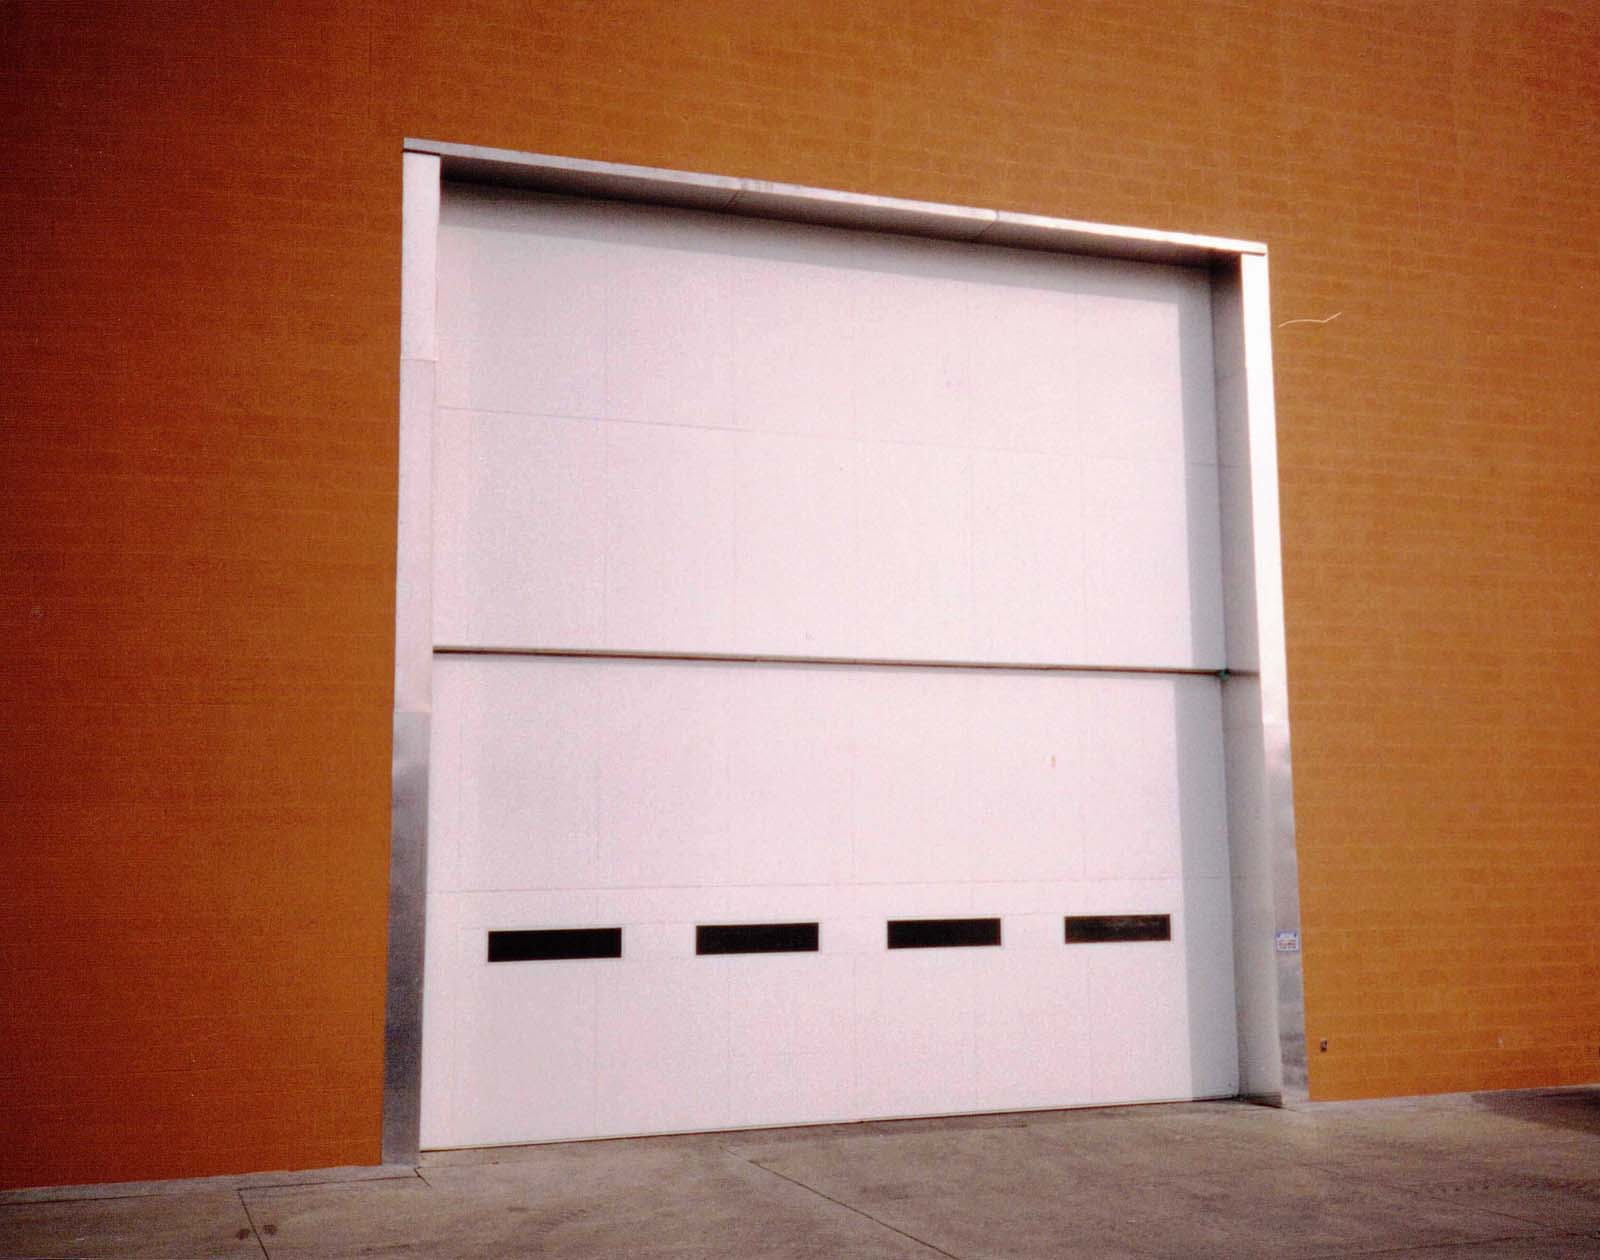 Manufacturing Facility Door